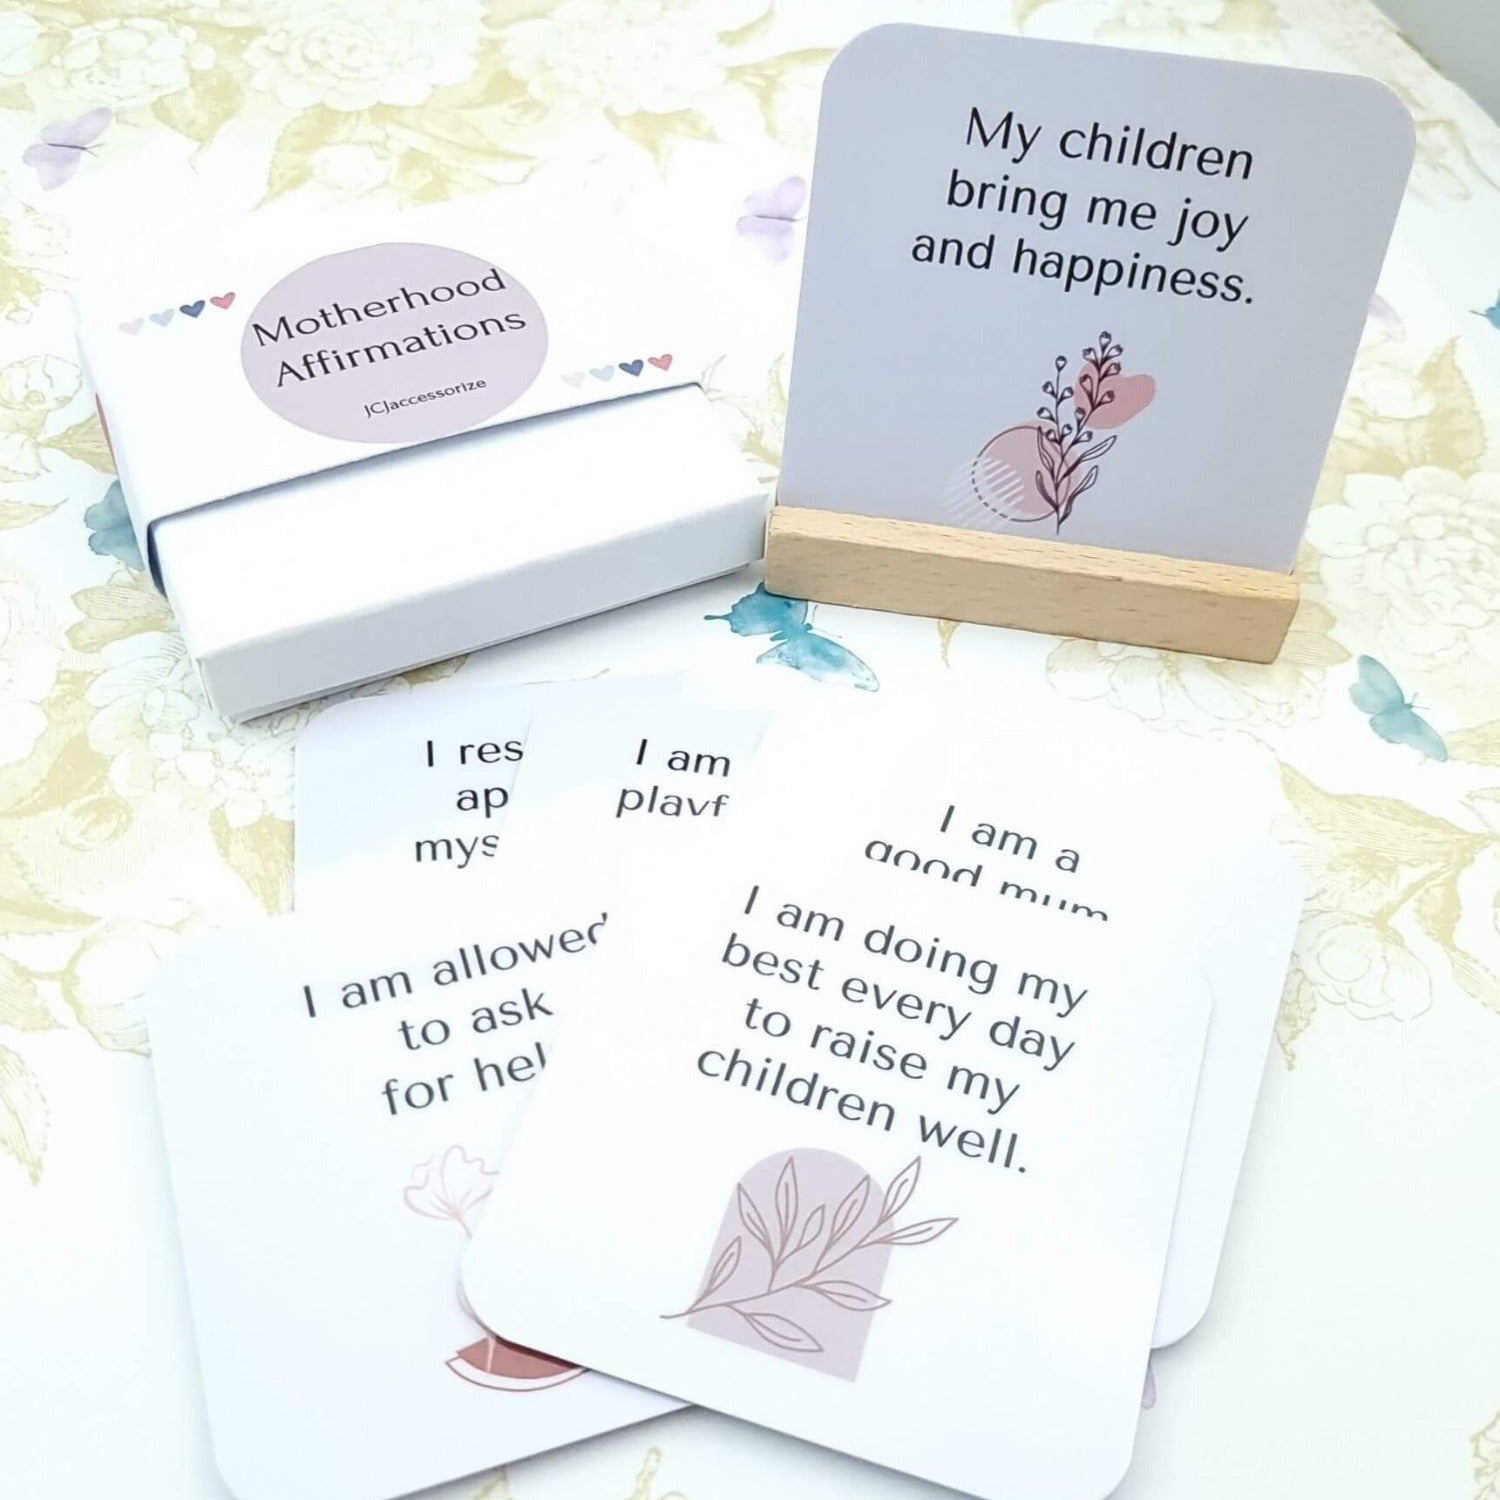 Motherhood affirmation cards